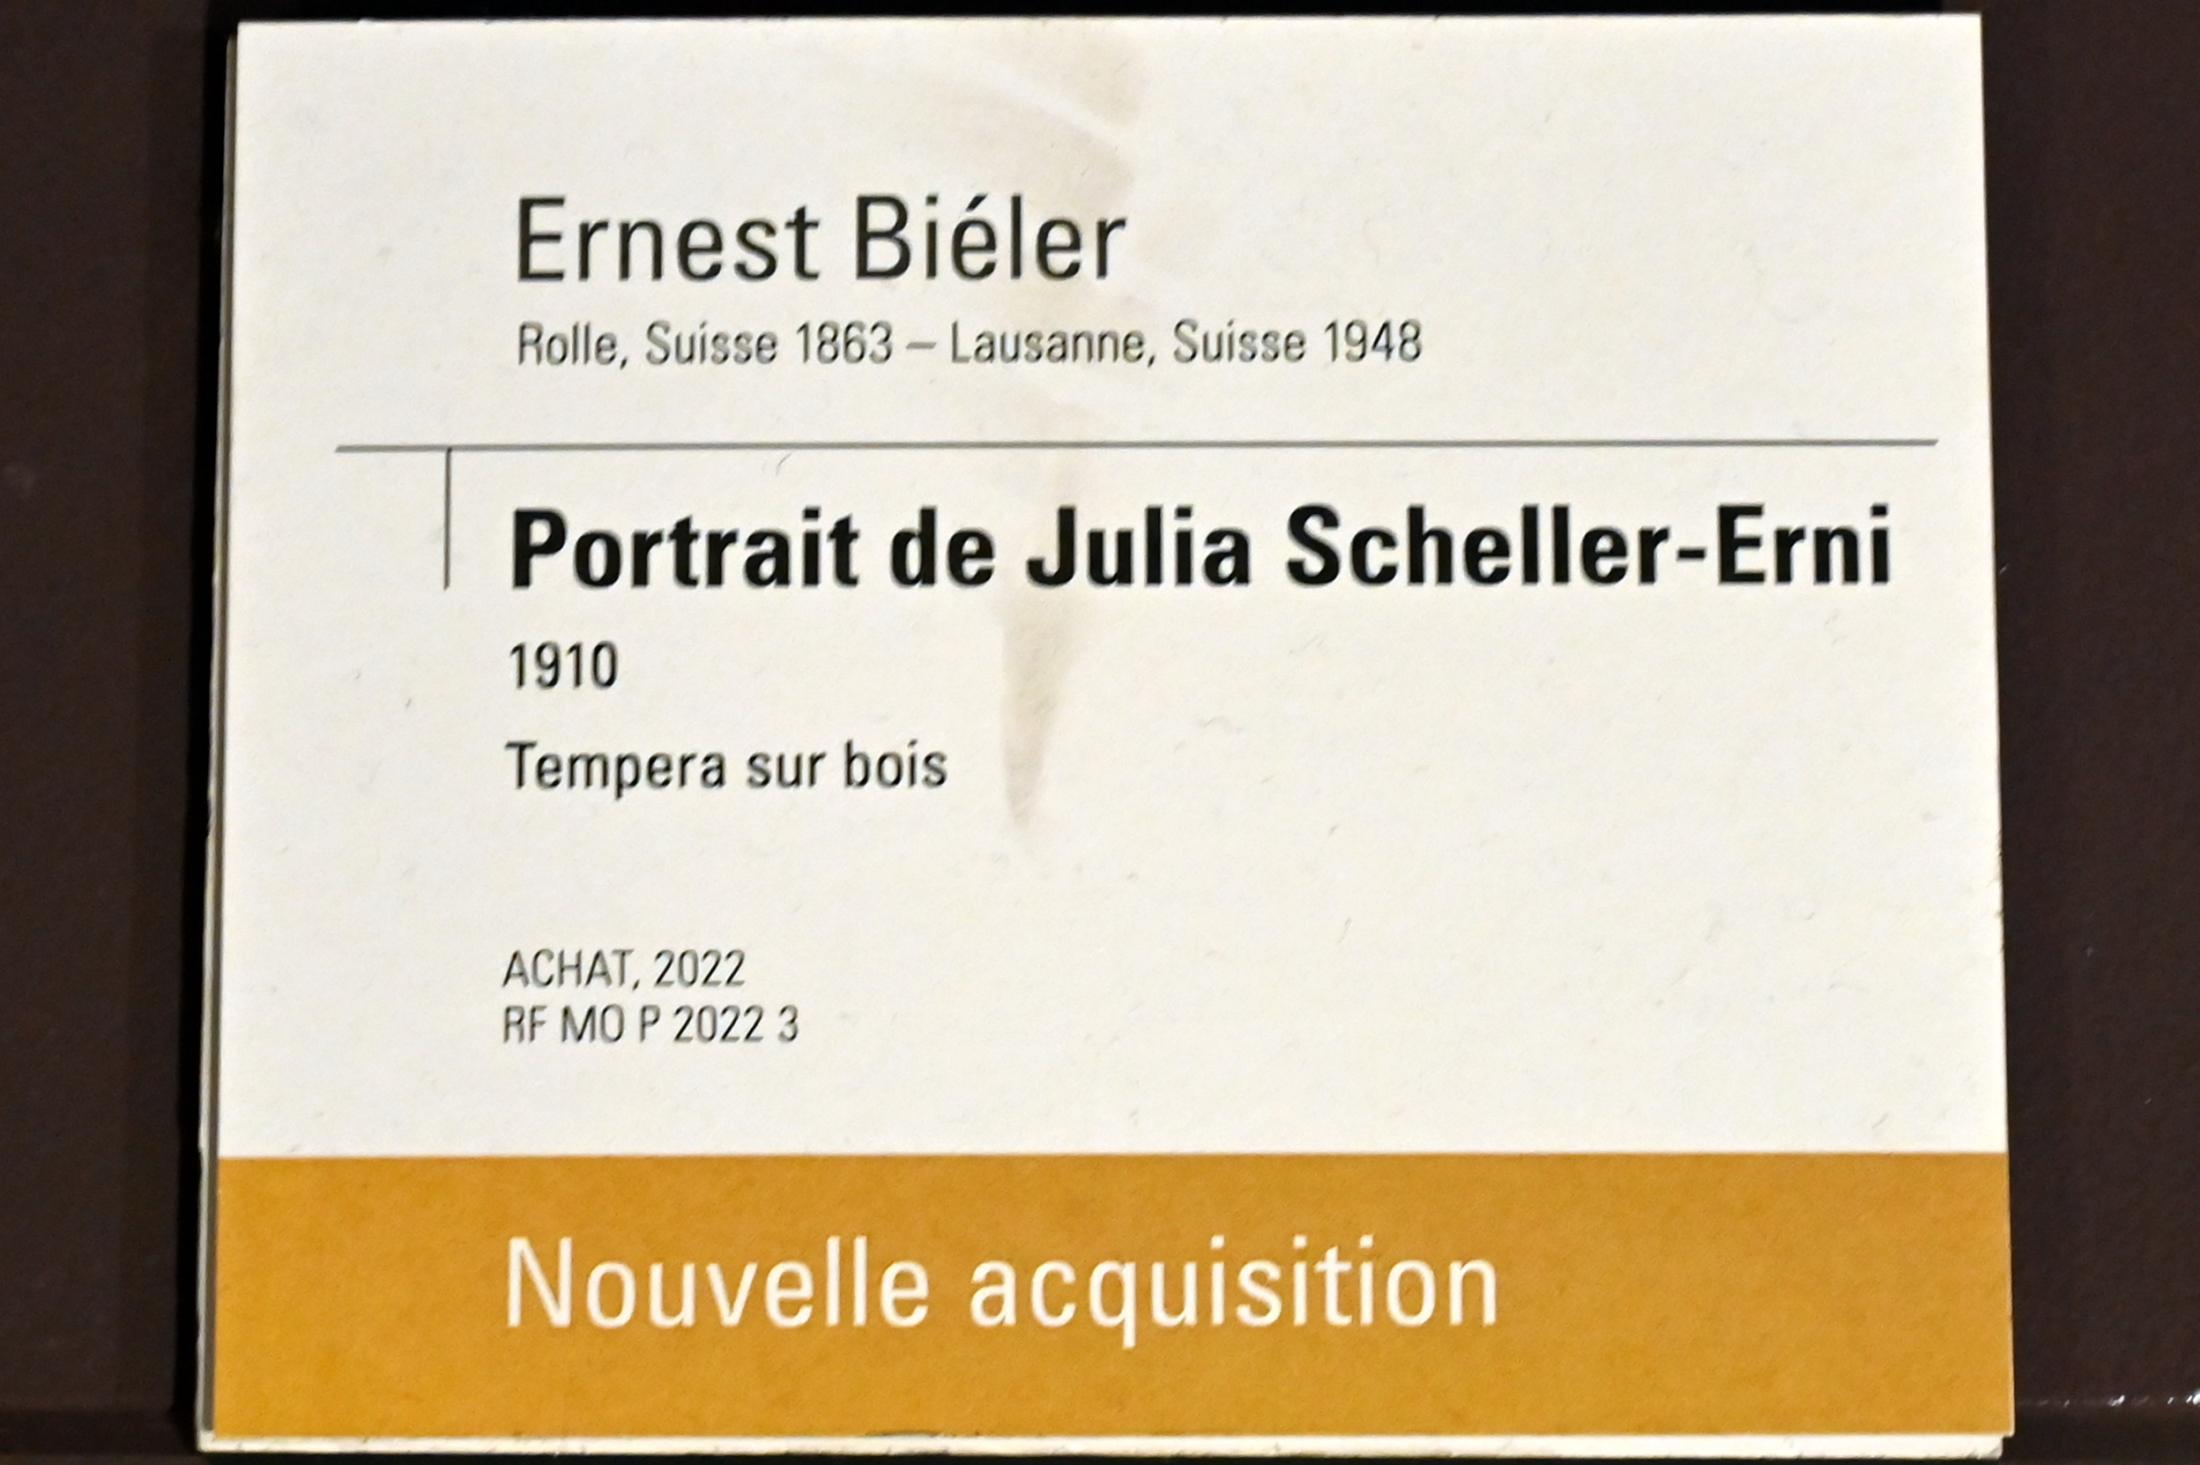 Ernest Biéler (1910), Porträt der Julia Scheller-Erni, Paris, Musée d’Orsay, 1910, Bild 2/2